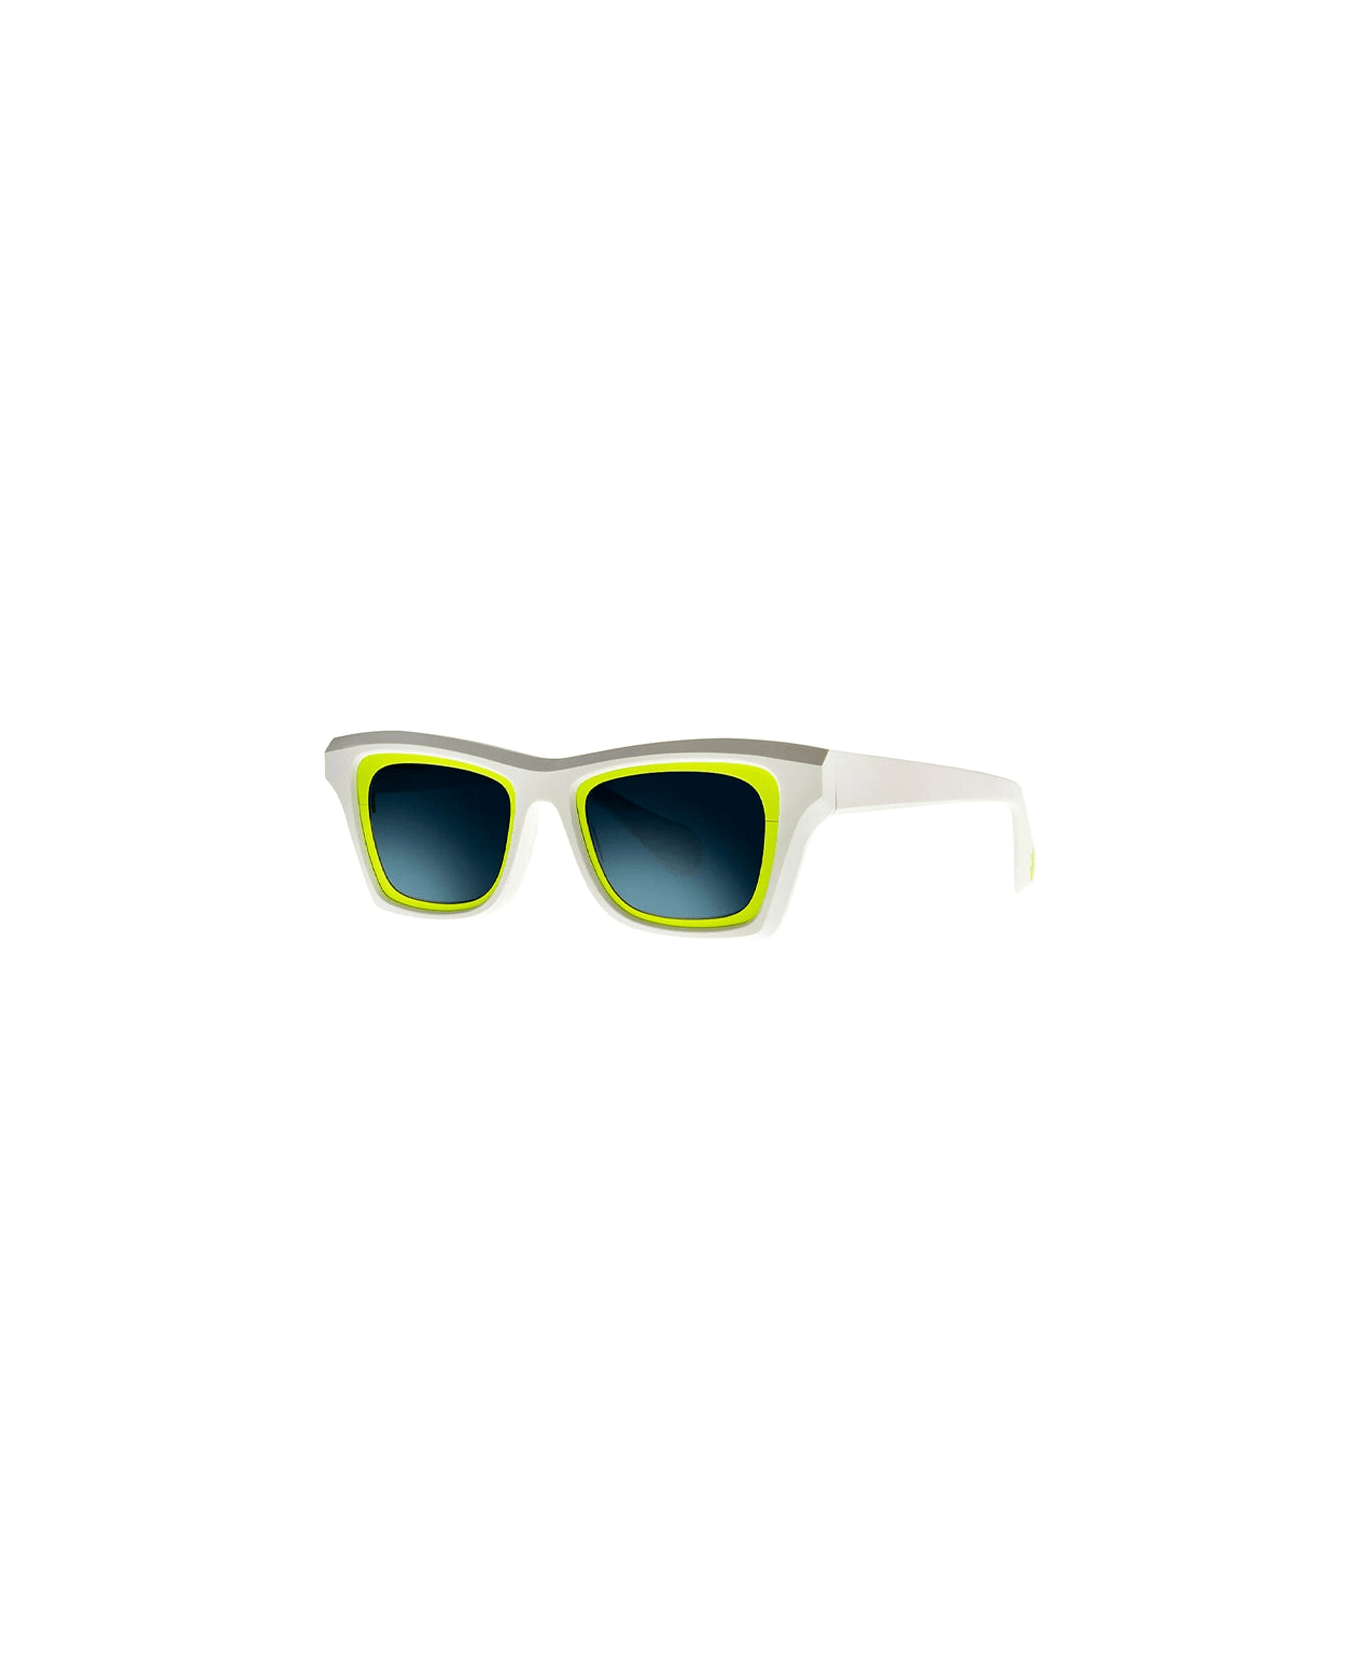 Theo Eyewear Mille+95 - 013 Sunglasses - white/fluo yellow サングラス